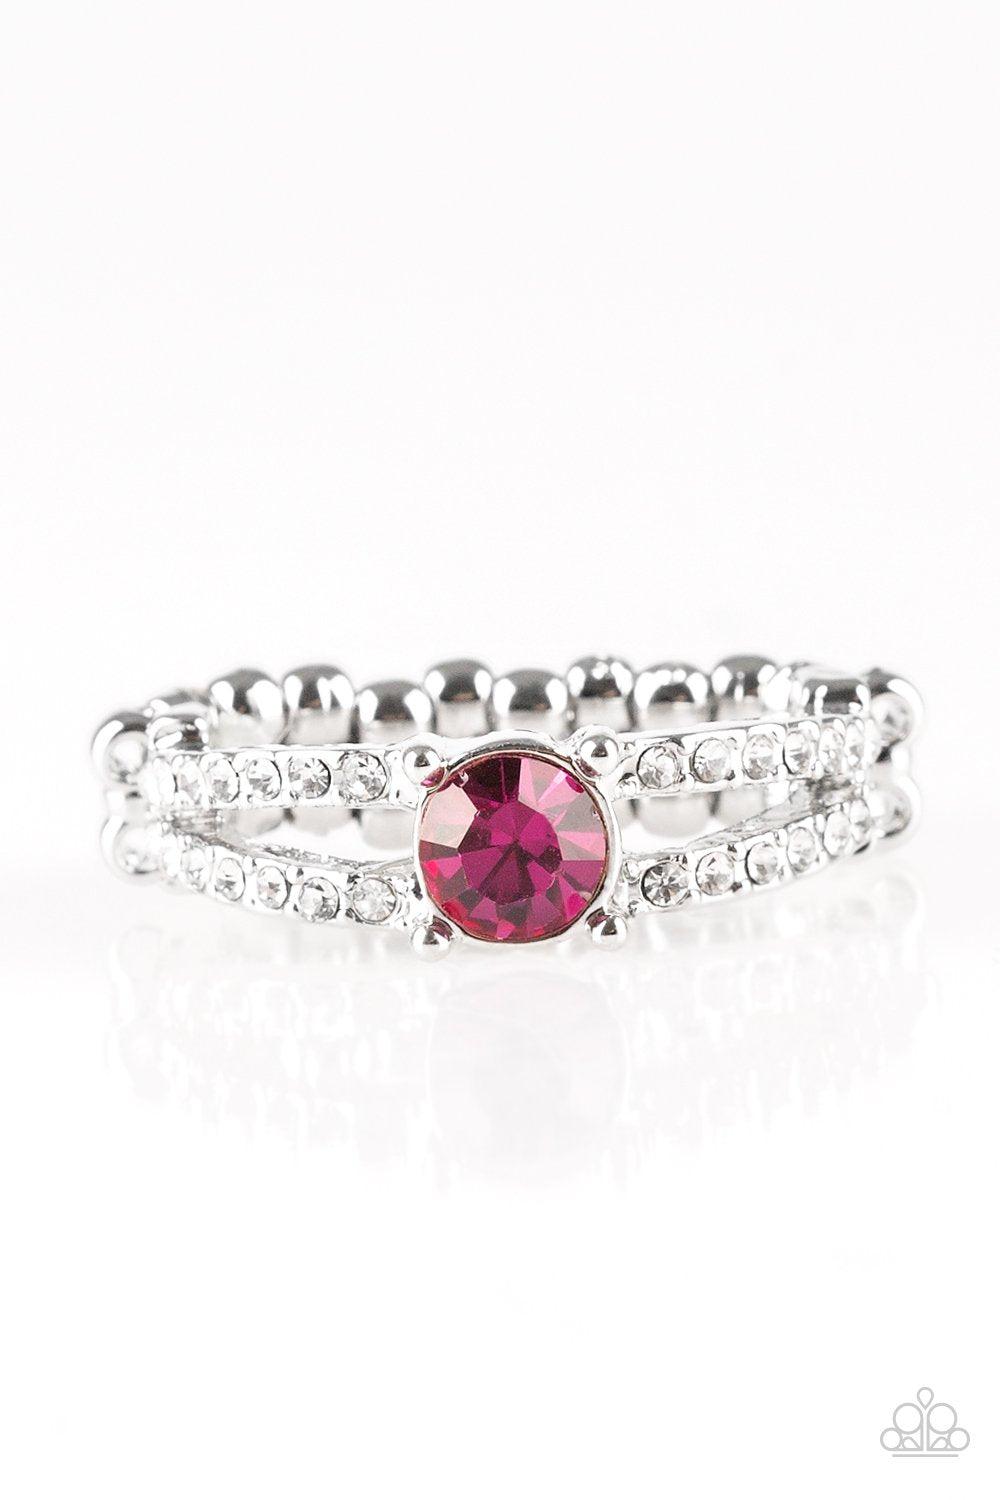 Dream Sparkle Pink Rhinestone Ring - Paparazzi Accessories- lightbox - CarasShop.com - $5 Jewelry by Cara Jewels